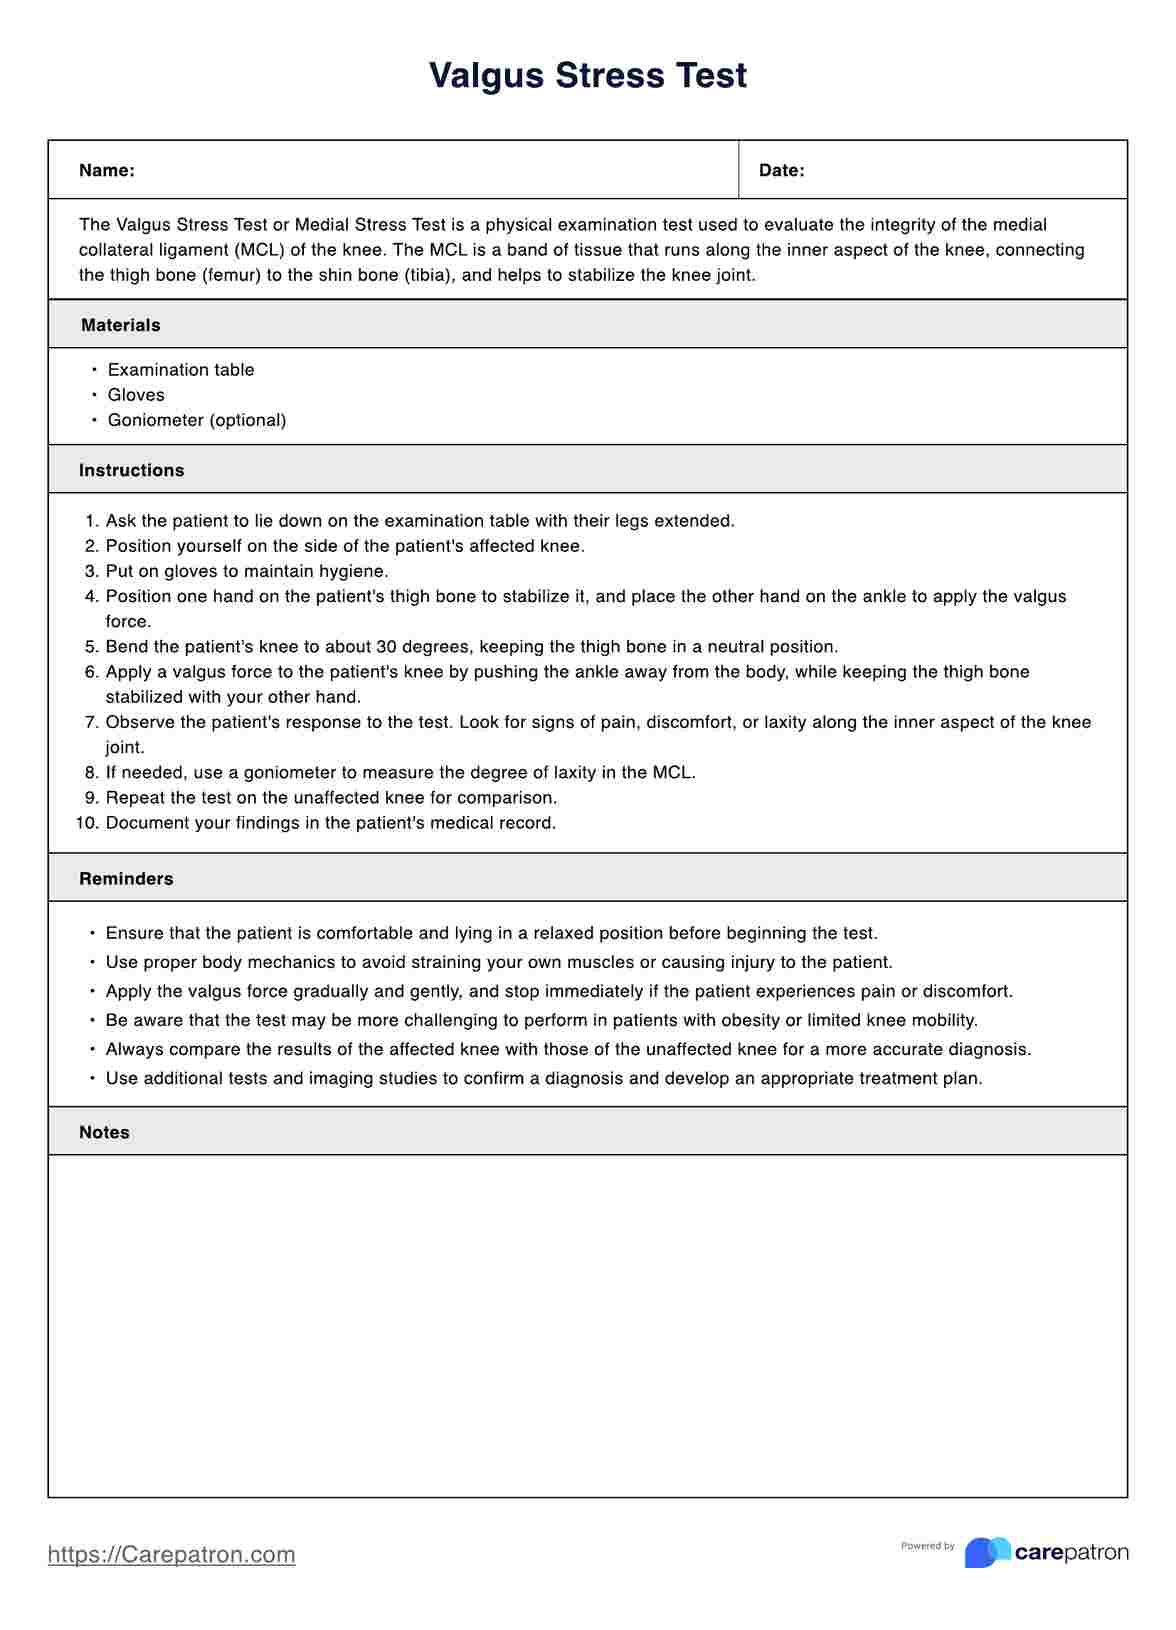 Valgus Stress Test PDF Example